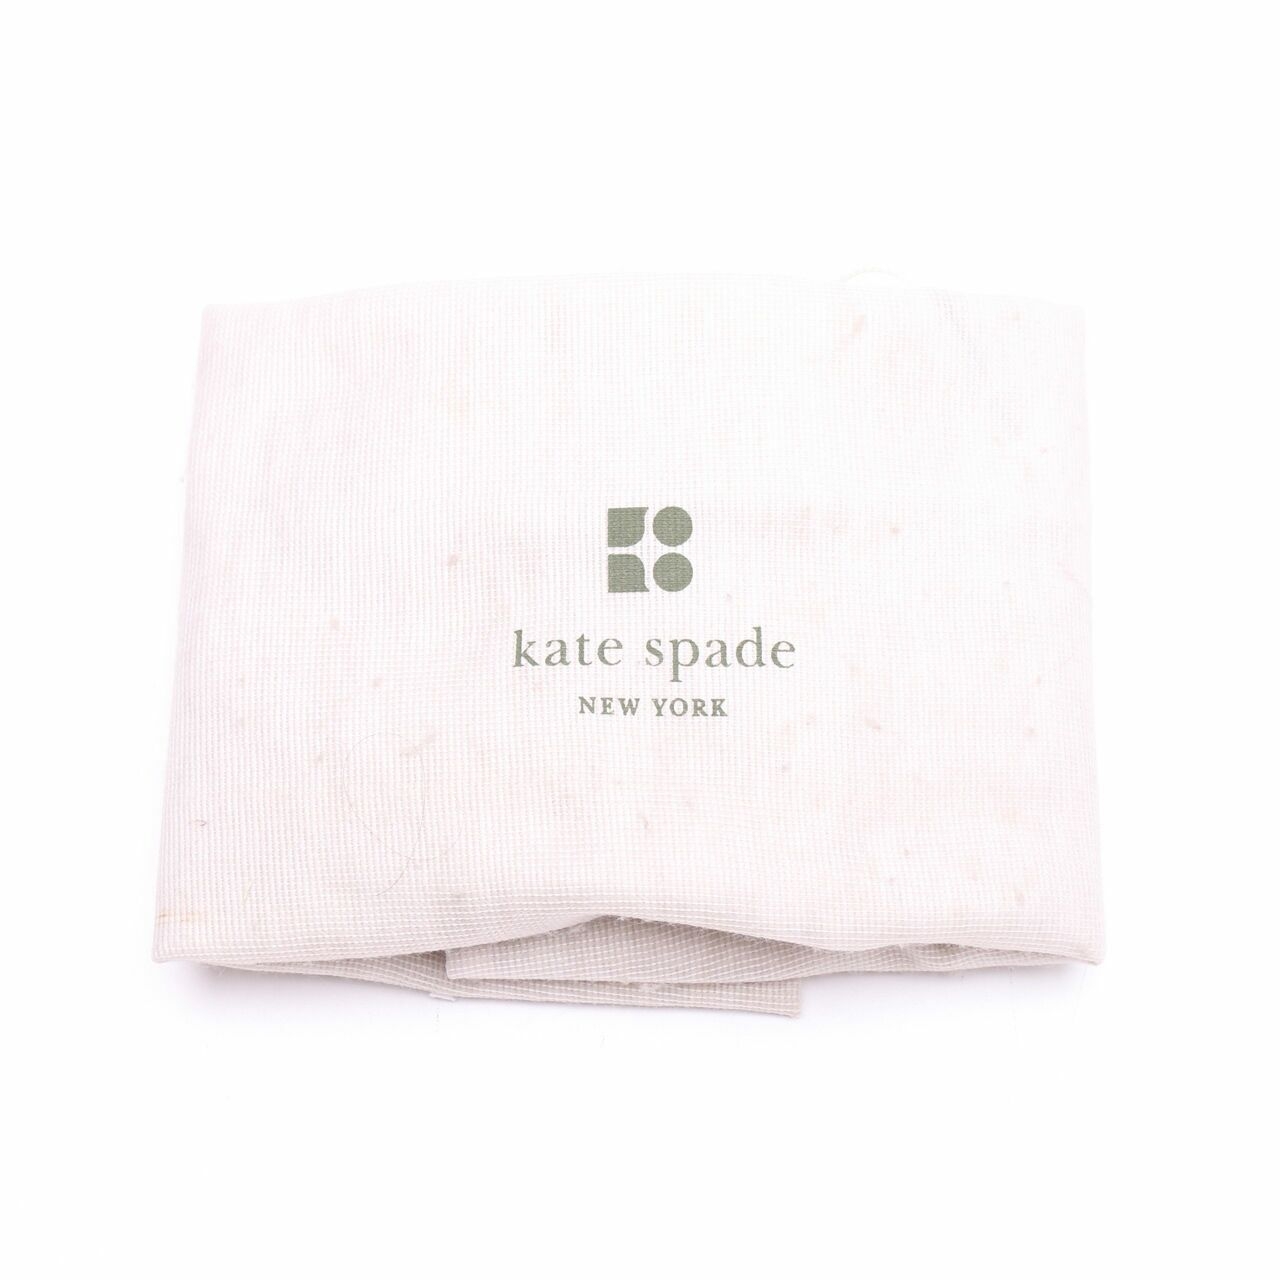  Kate Spade Square Rudy Classic Noel Shoulder Bag